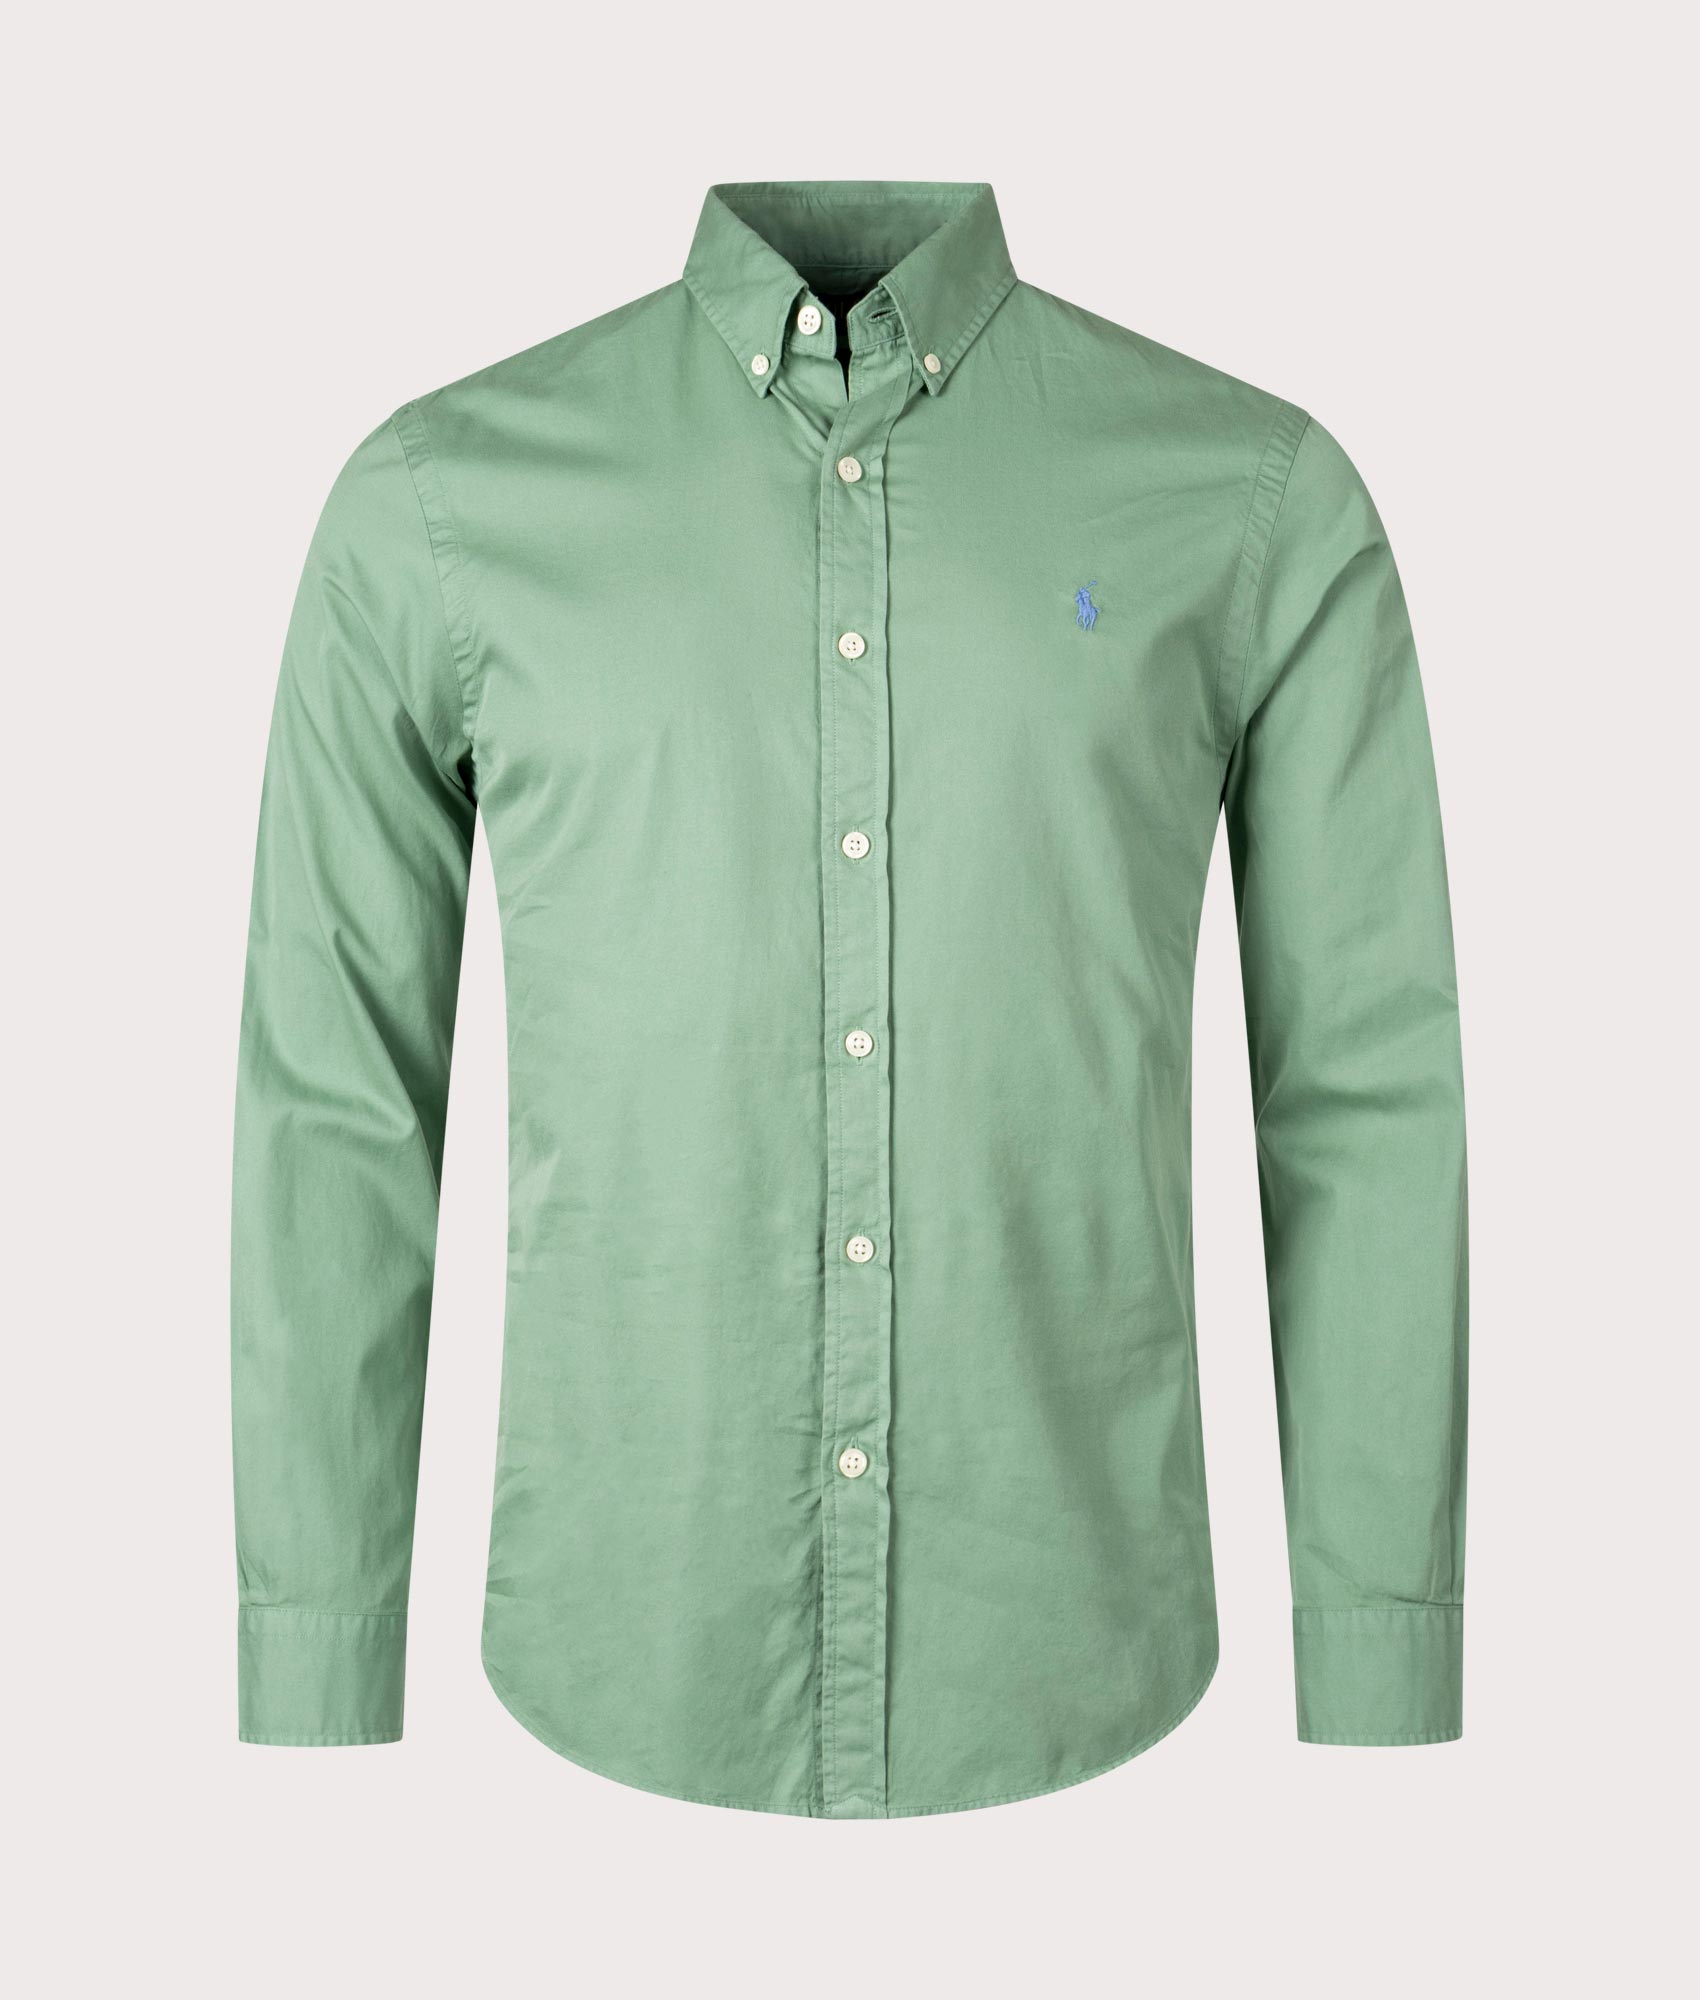 Polo Ralph Lauren Mens Slim Fit Twill Sport Shirt - Colour: 001 Faded Mint - Size: XL